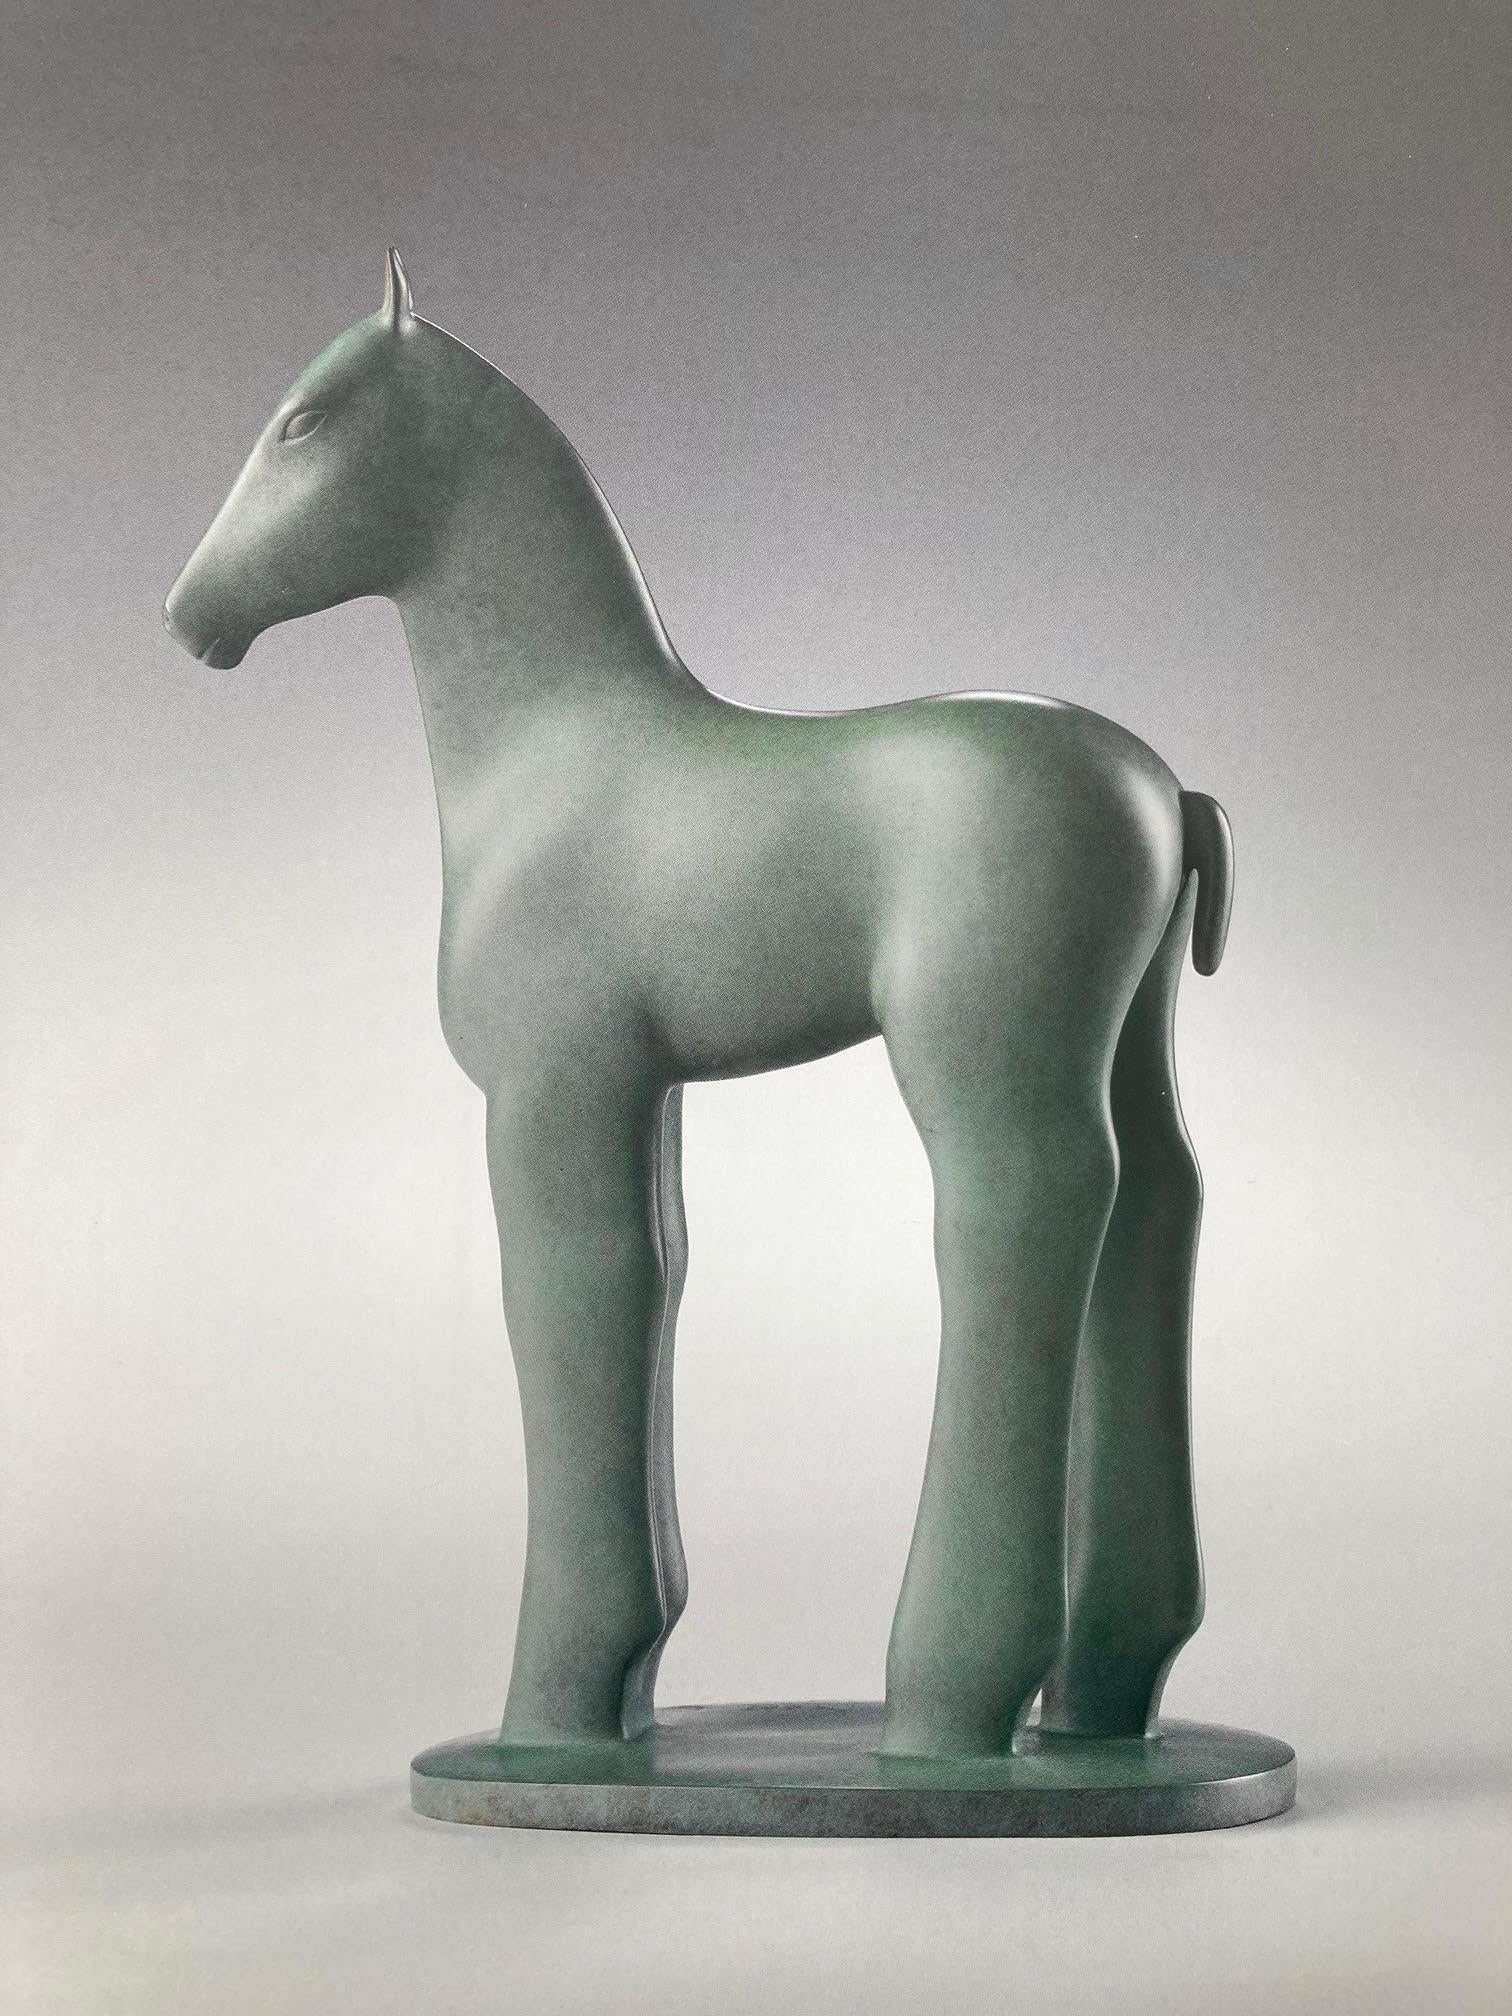 KOBE Figurative Sculpture - Puledro Small Bronze Sculpture Horse Animal Green Patina